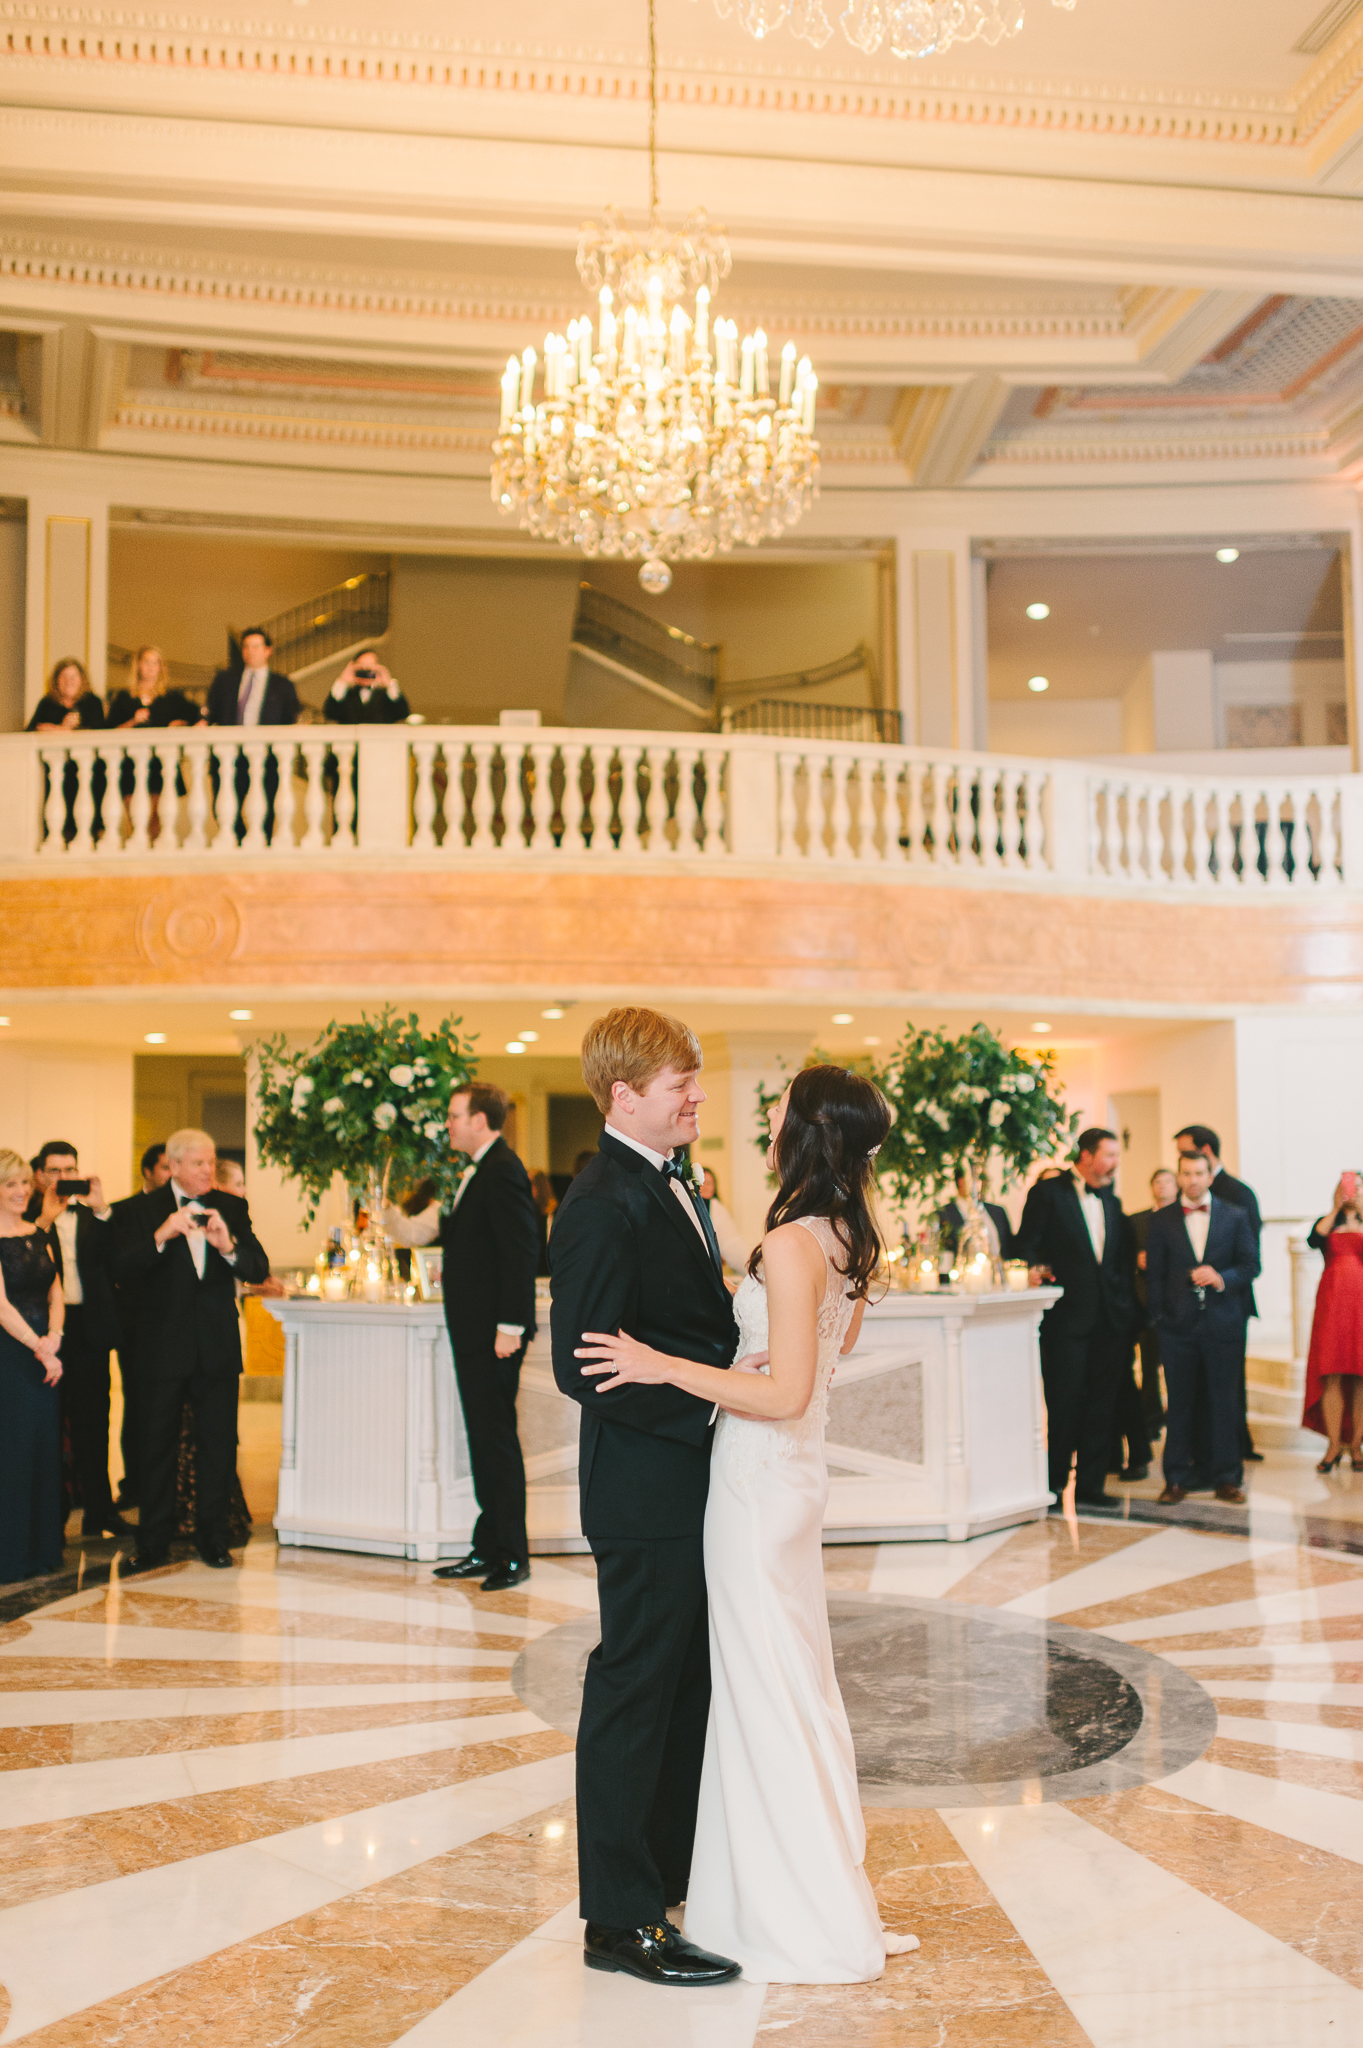 The Best 10 Wedding Venues in Washington DC